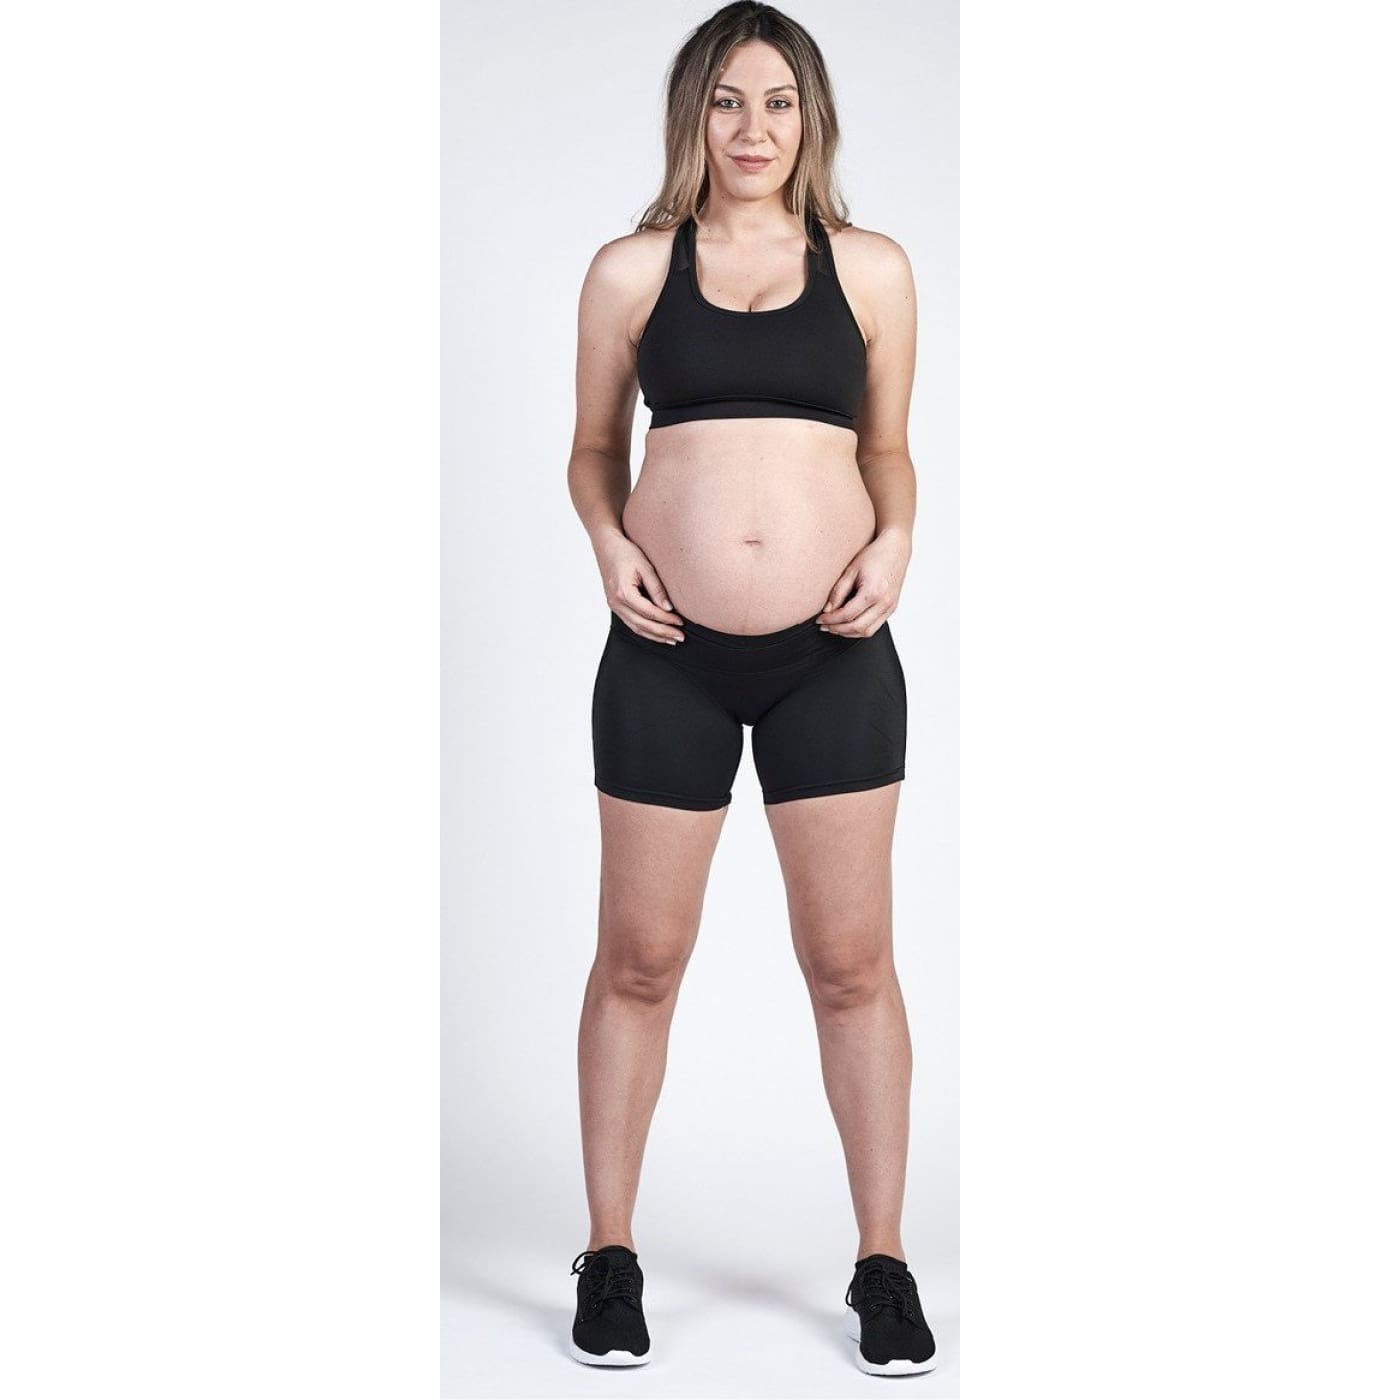 SRC Pregnancy Mini - Black XL - XL / Black - FOR MUM - MATERNITY SUPPORT GARMENTS (PRE/POST)